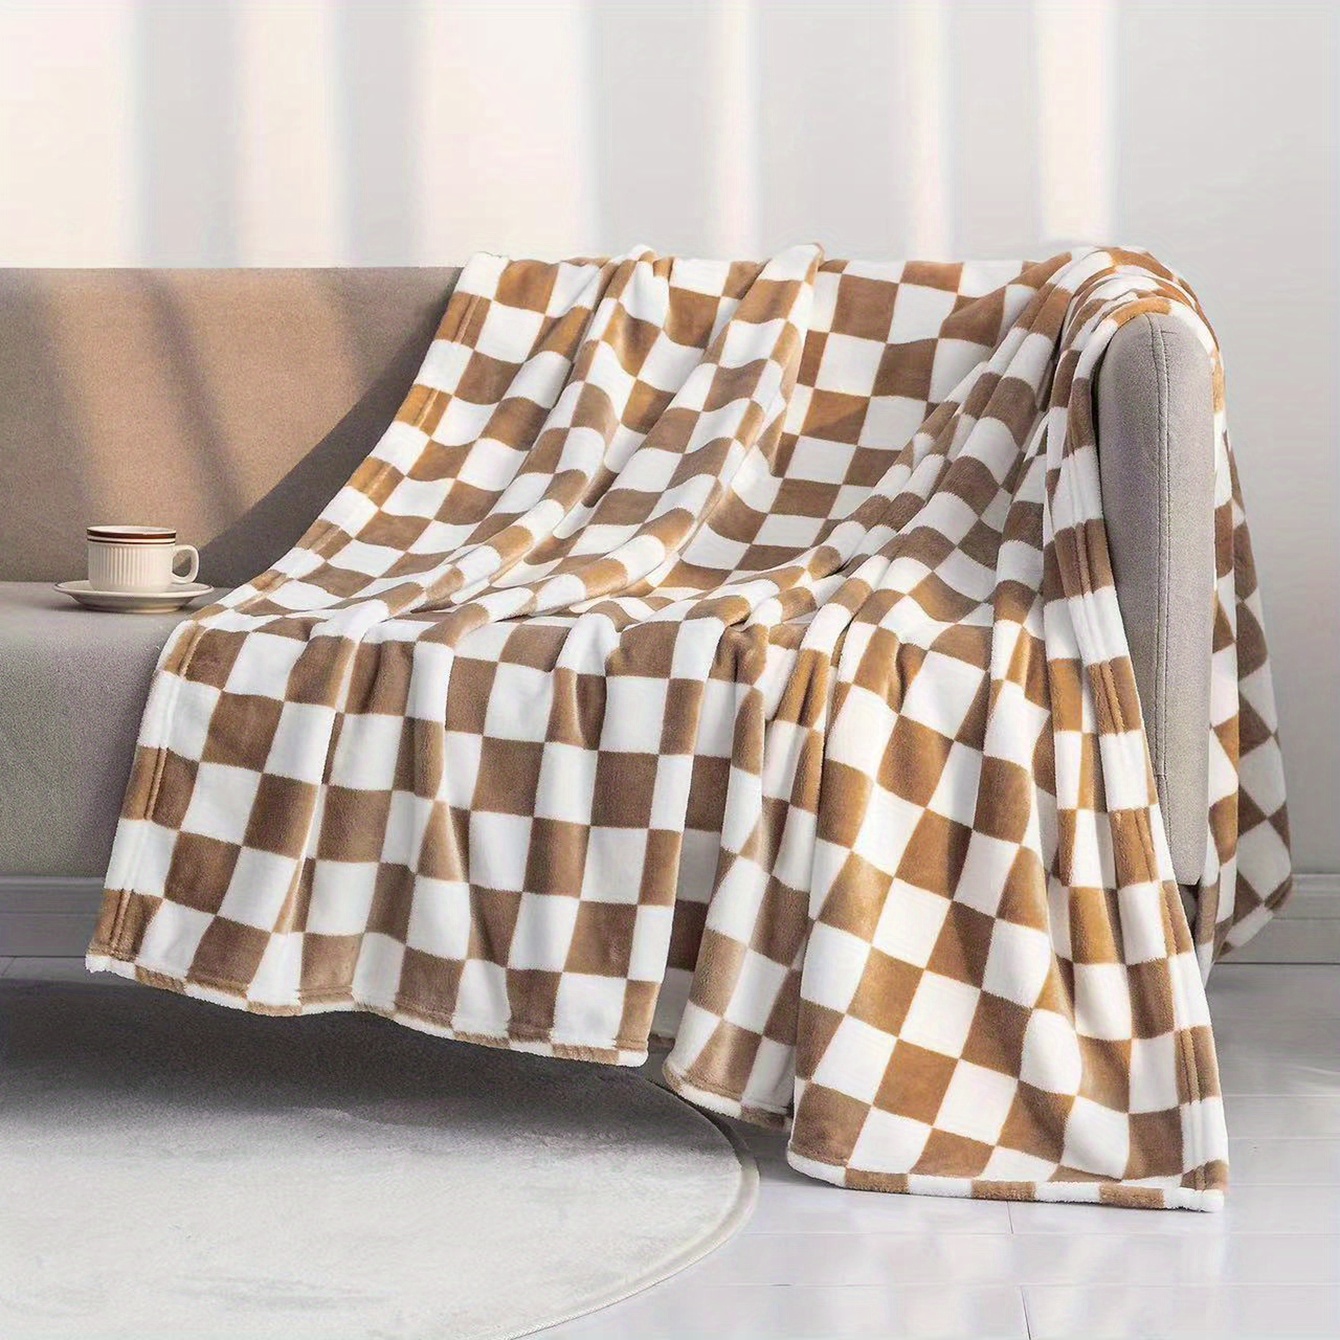 Estilo nórdico xadrez macio colcha sofá cama cobertor portátil